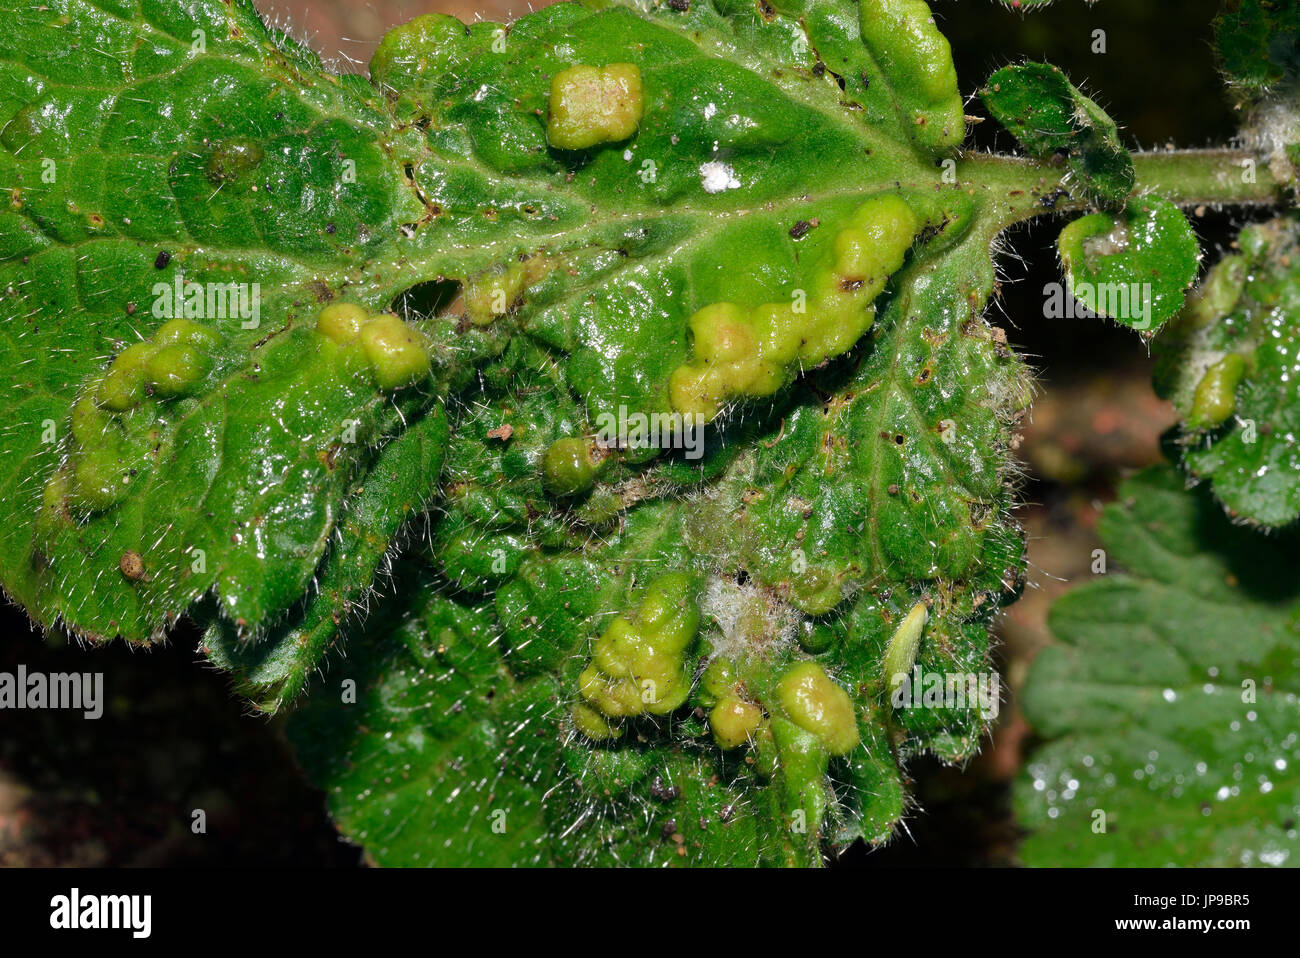 Leaf Galls caused by Gall Mite - Cecidophyes nudus on leaf of Herb Bennet or Wood Avens leaf - Geum urbanum Stock Photo